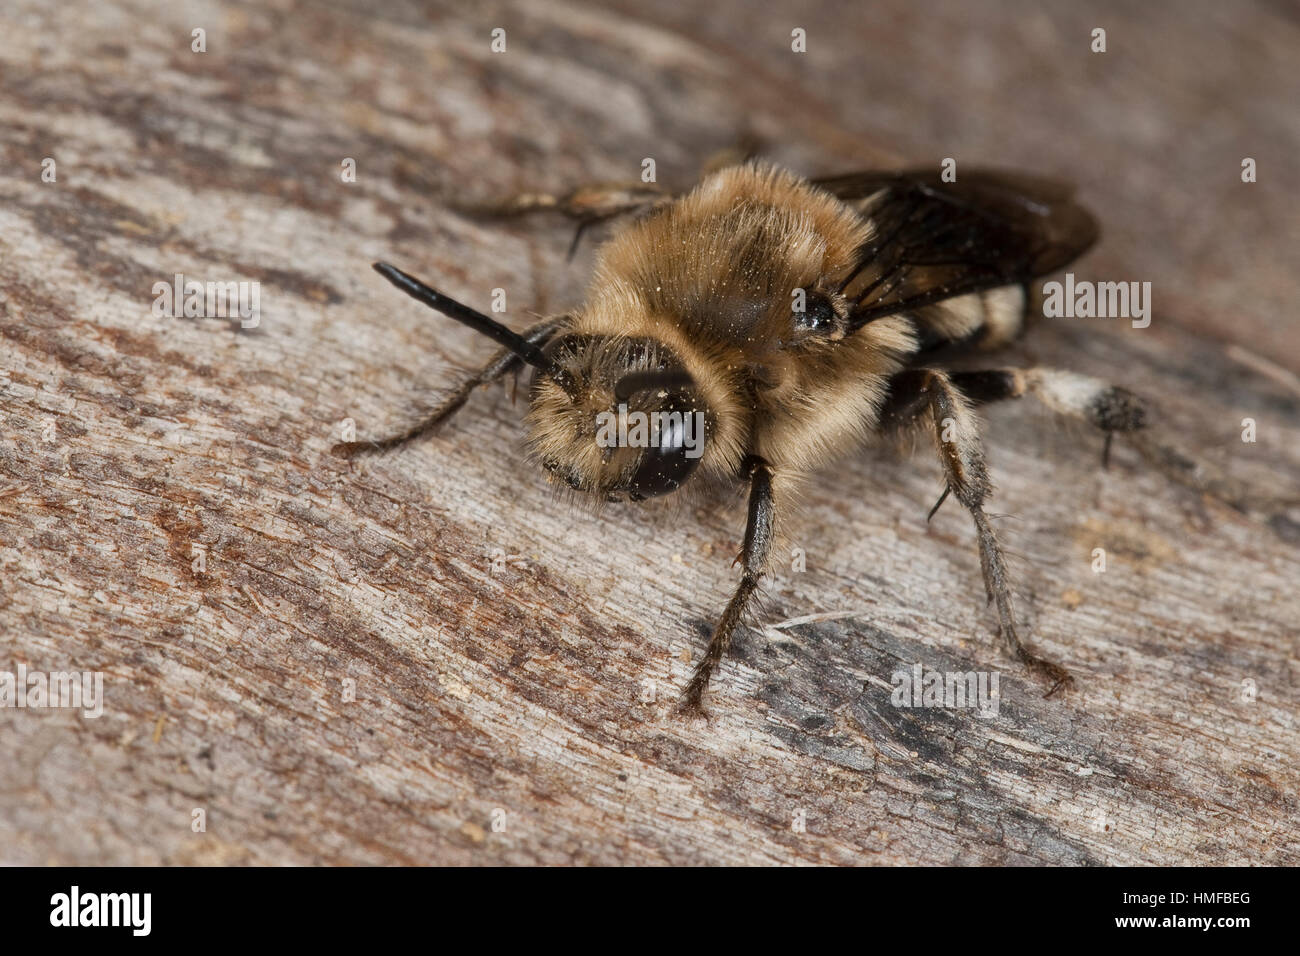 Gemeine Trauerbiene, Trauer-Biene, Melecta albifrons, Melecta punctata, Melecta armata, Kuckucksbiene, cuculo bee Foto Stock